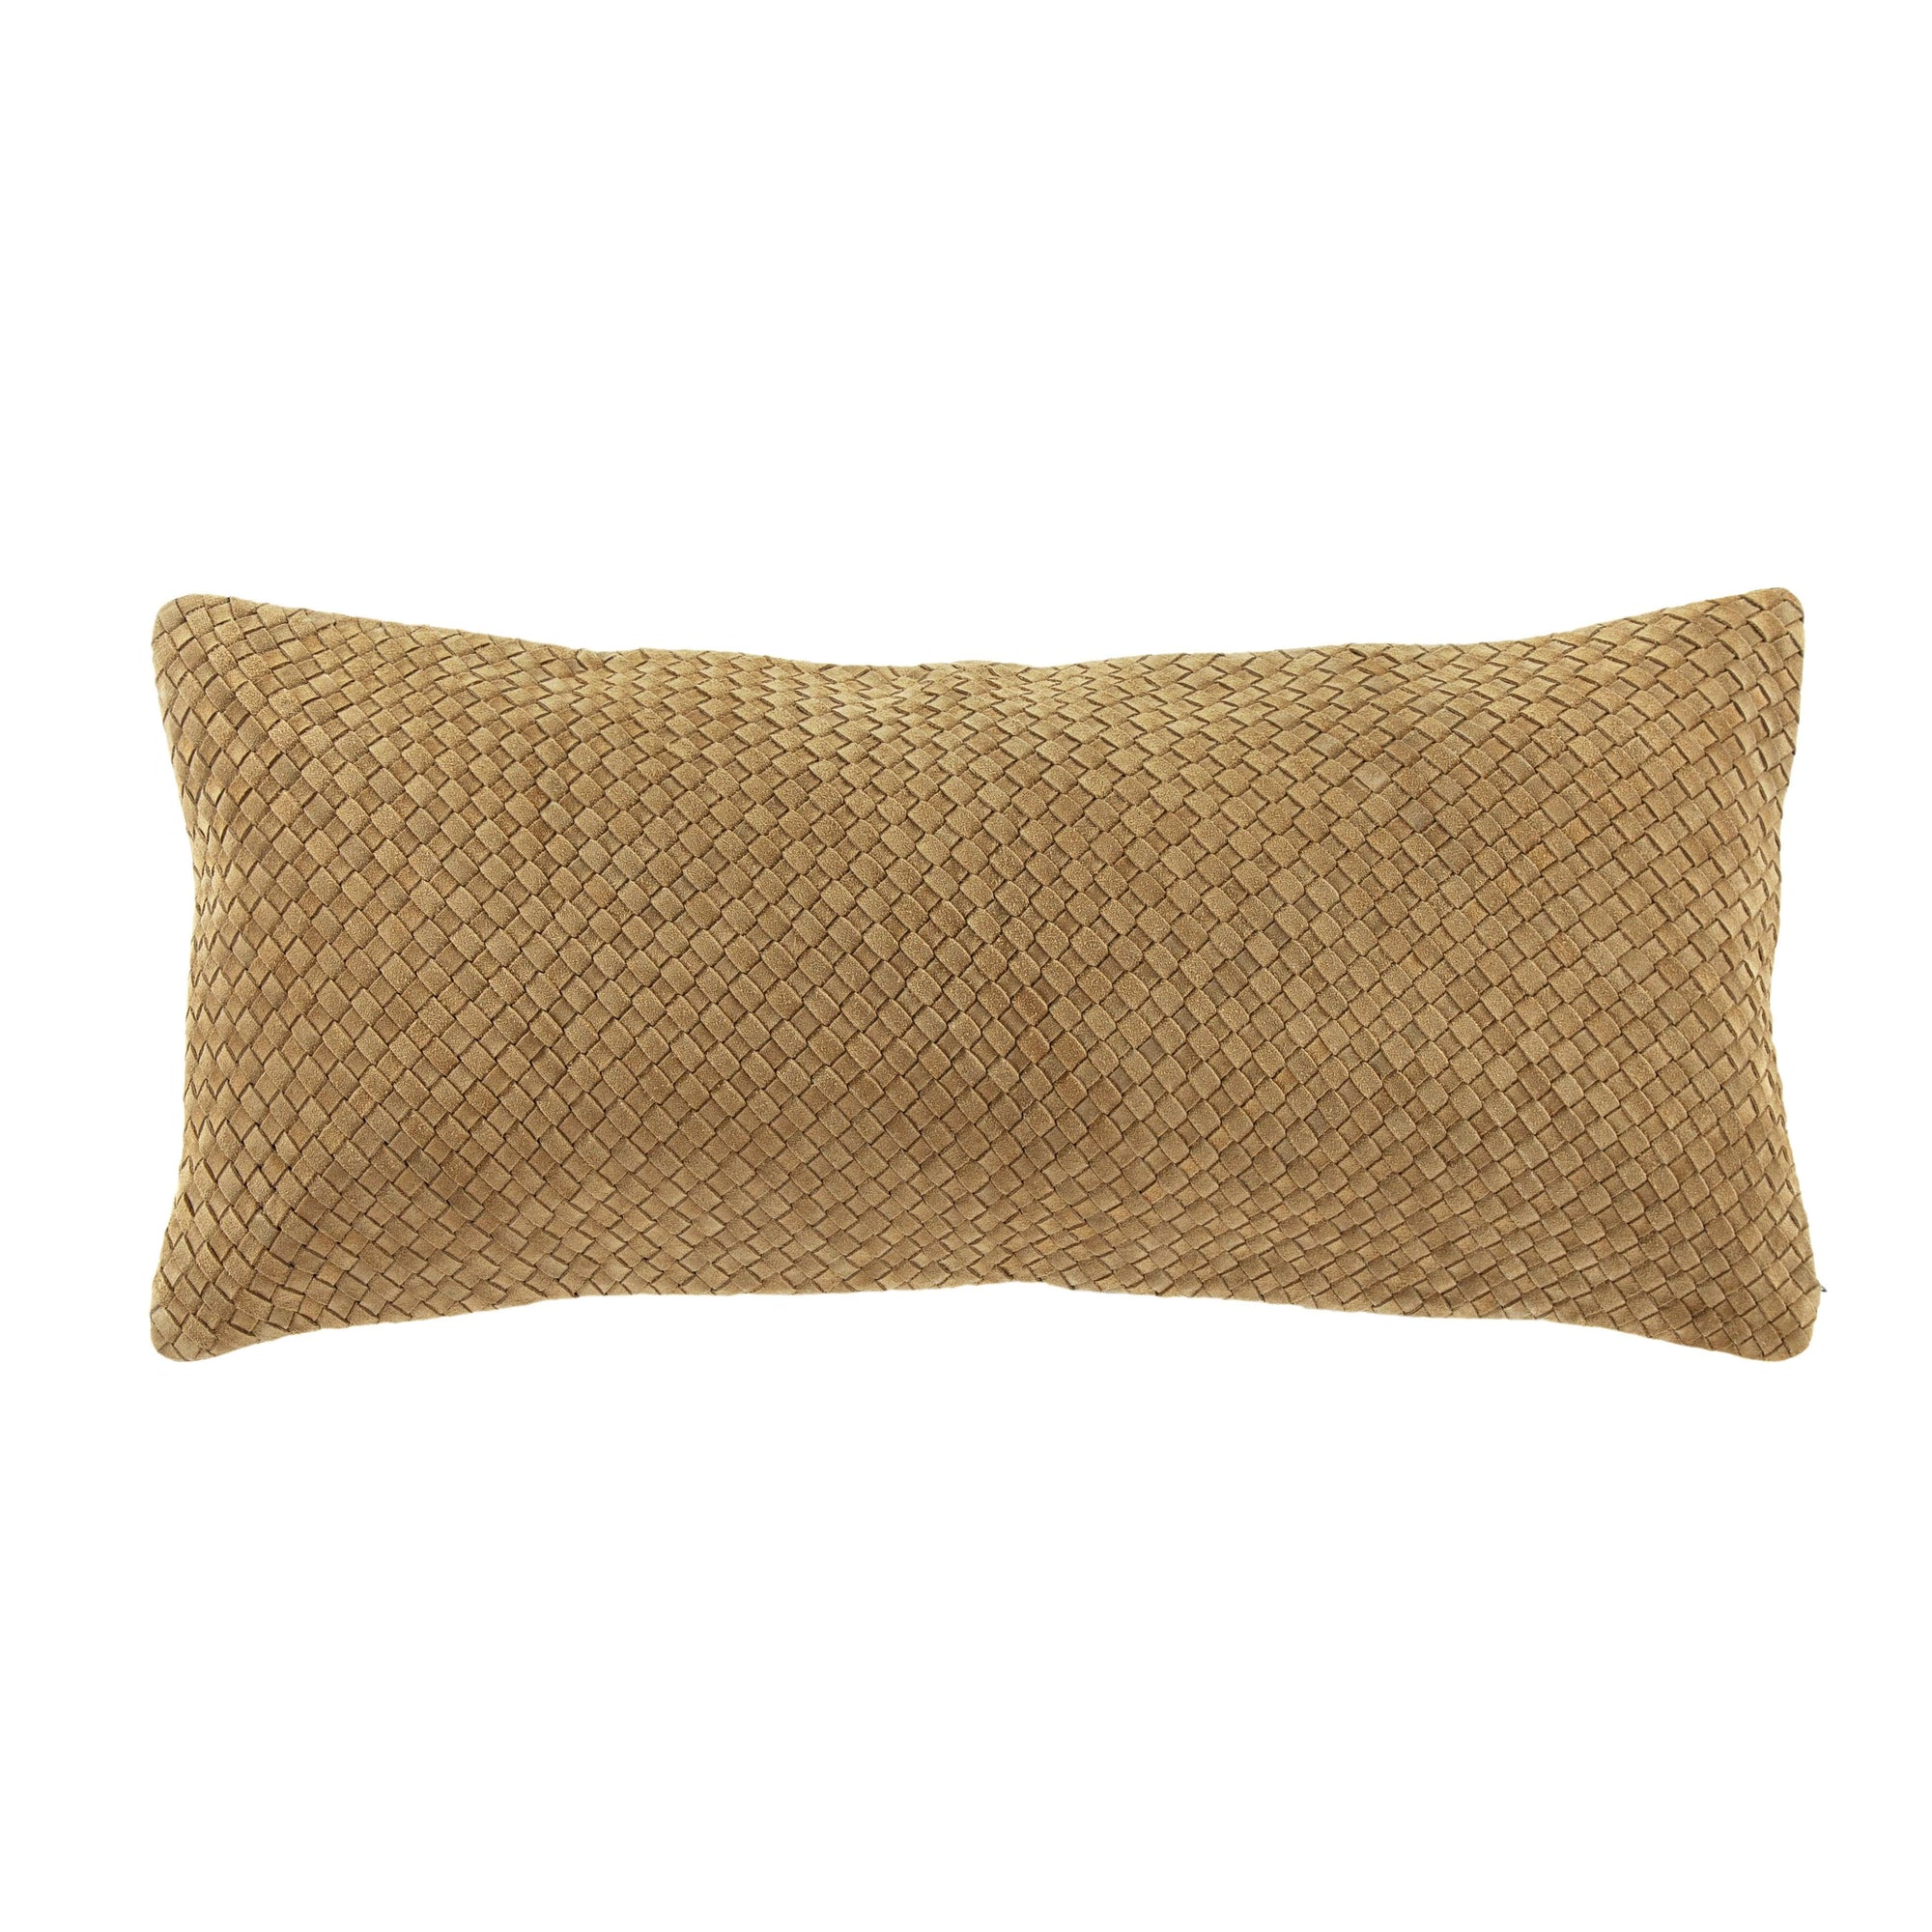 Woven Suede Lumbar Pillow Leather Pillow